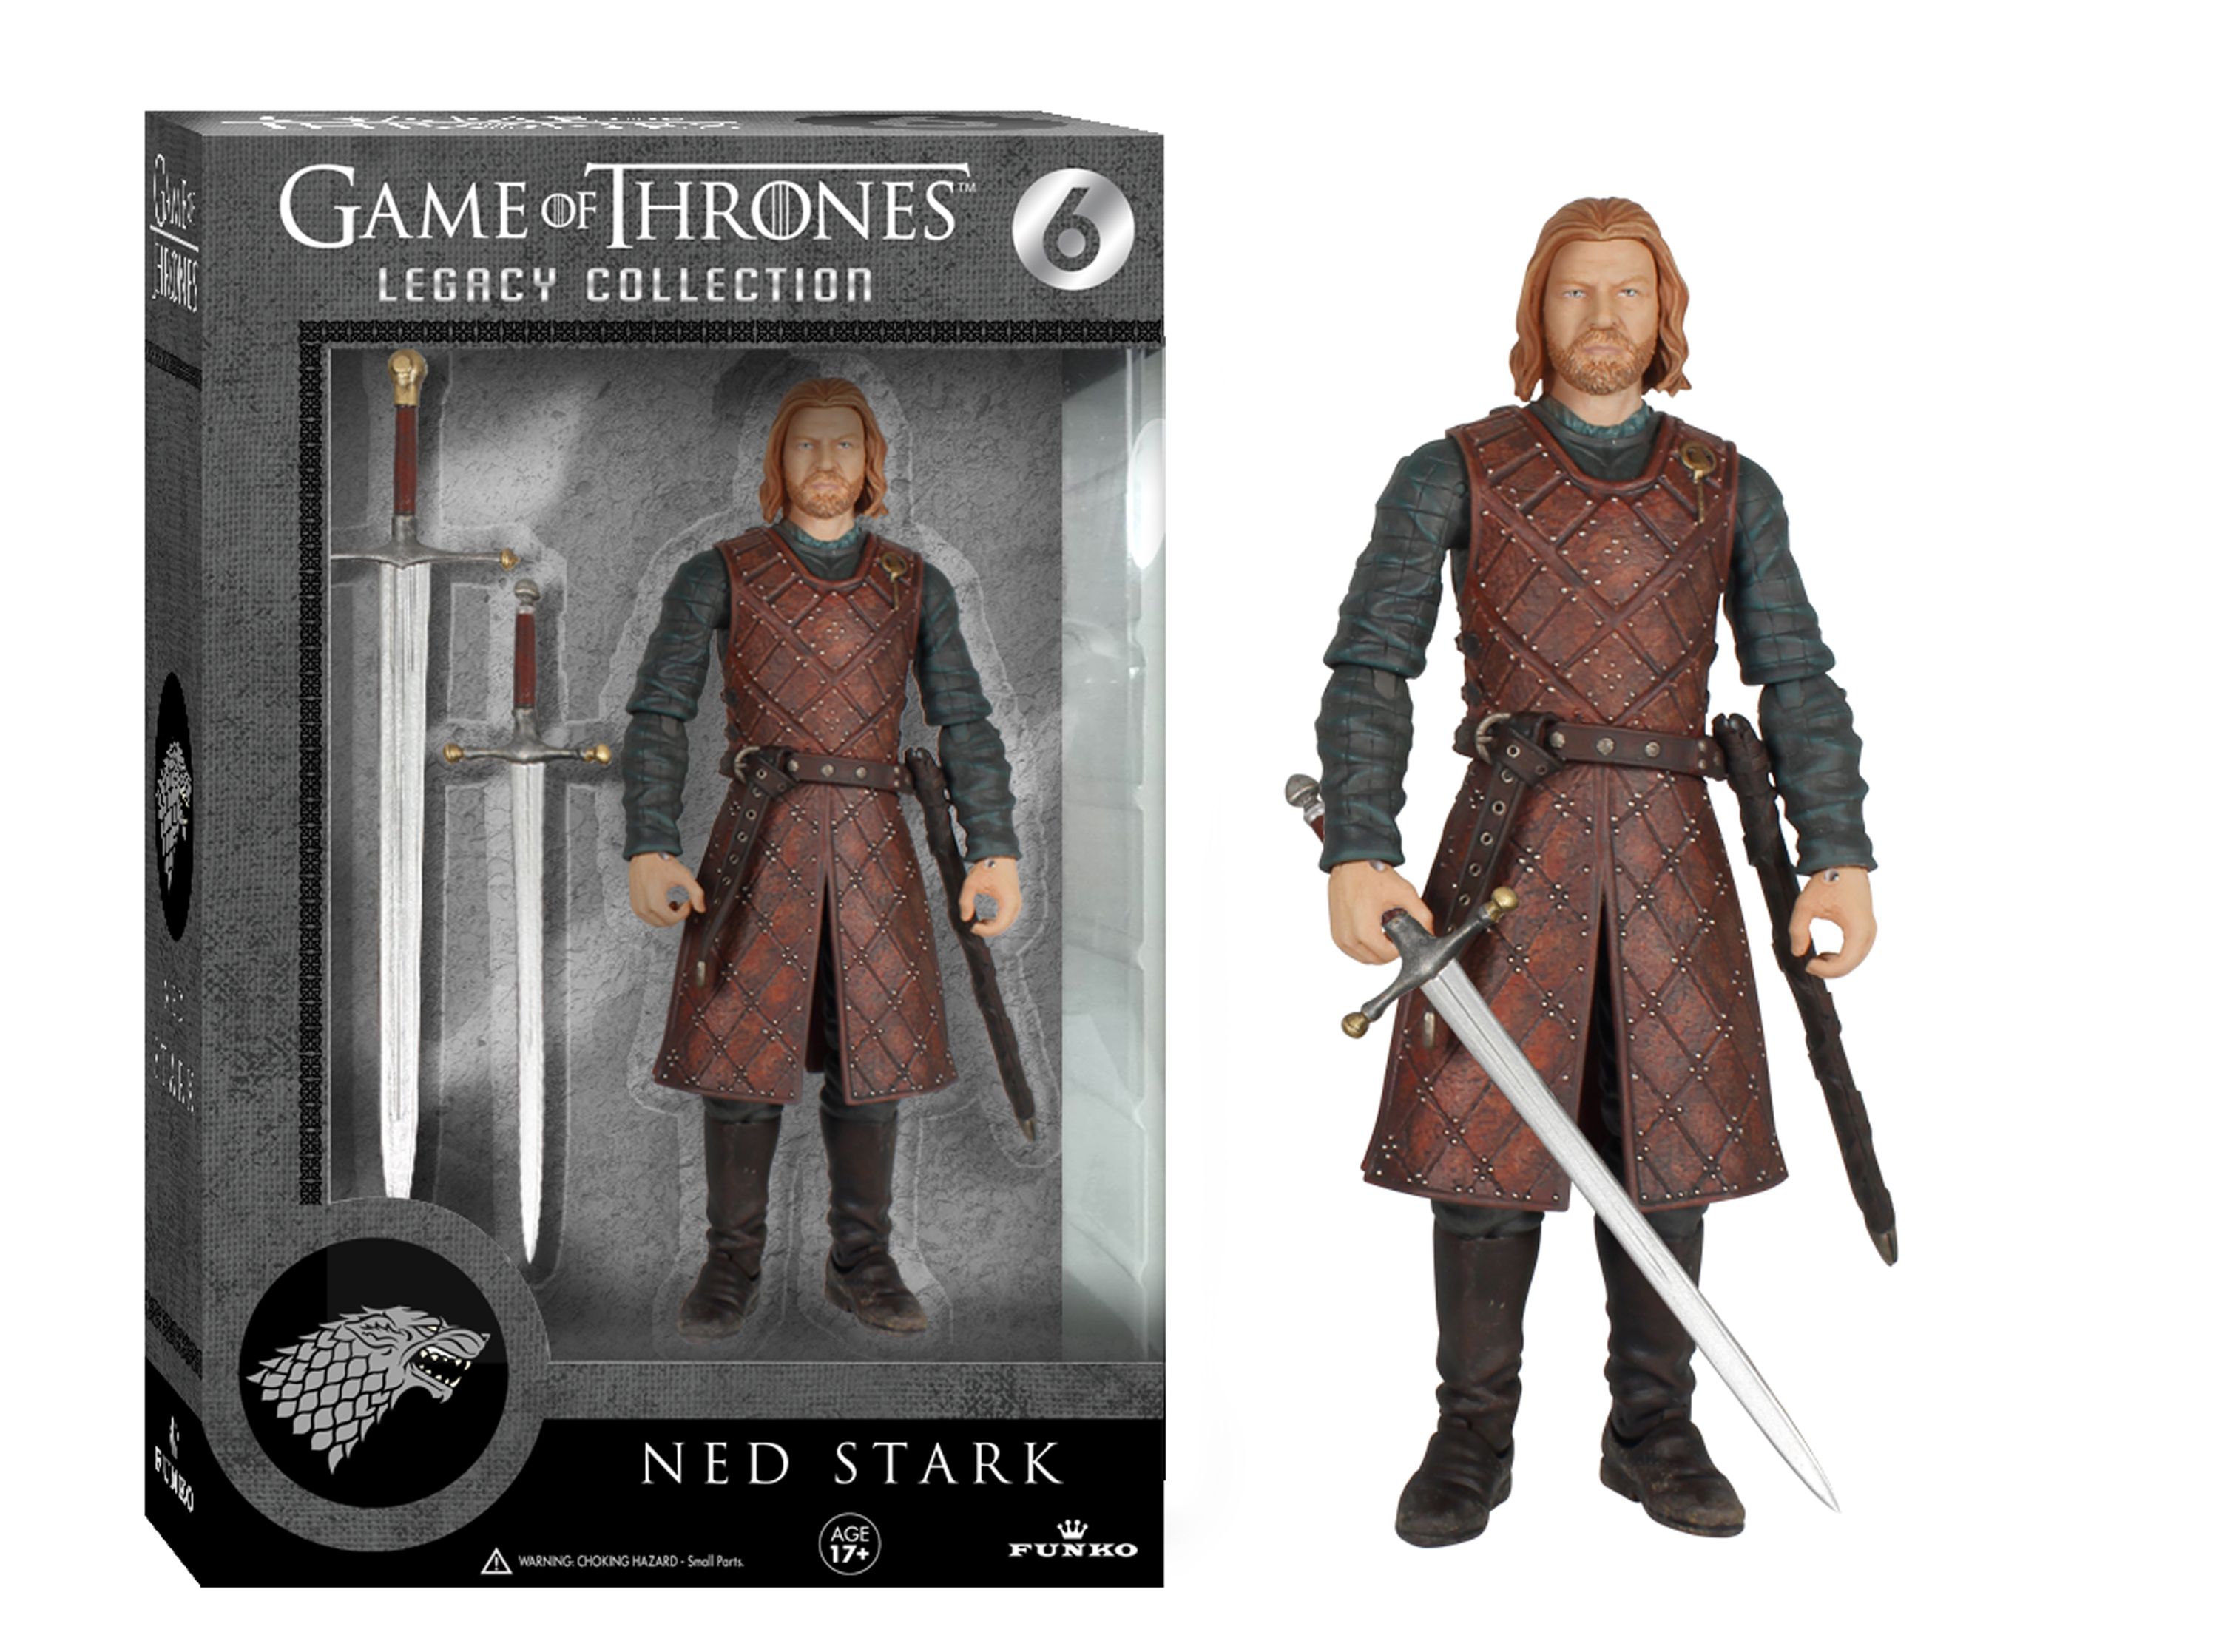 Ned Stark action figure